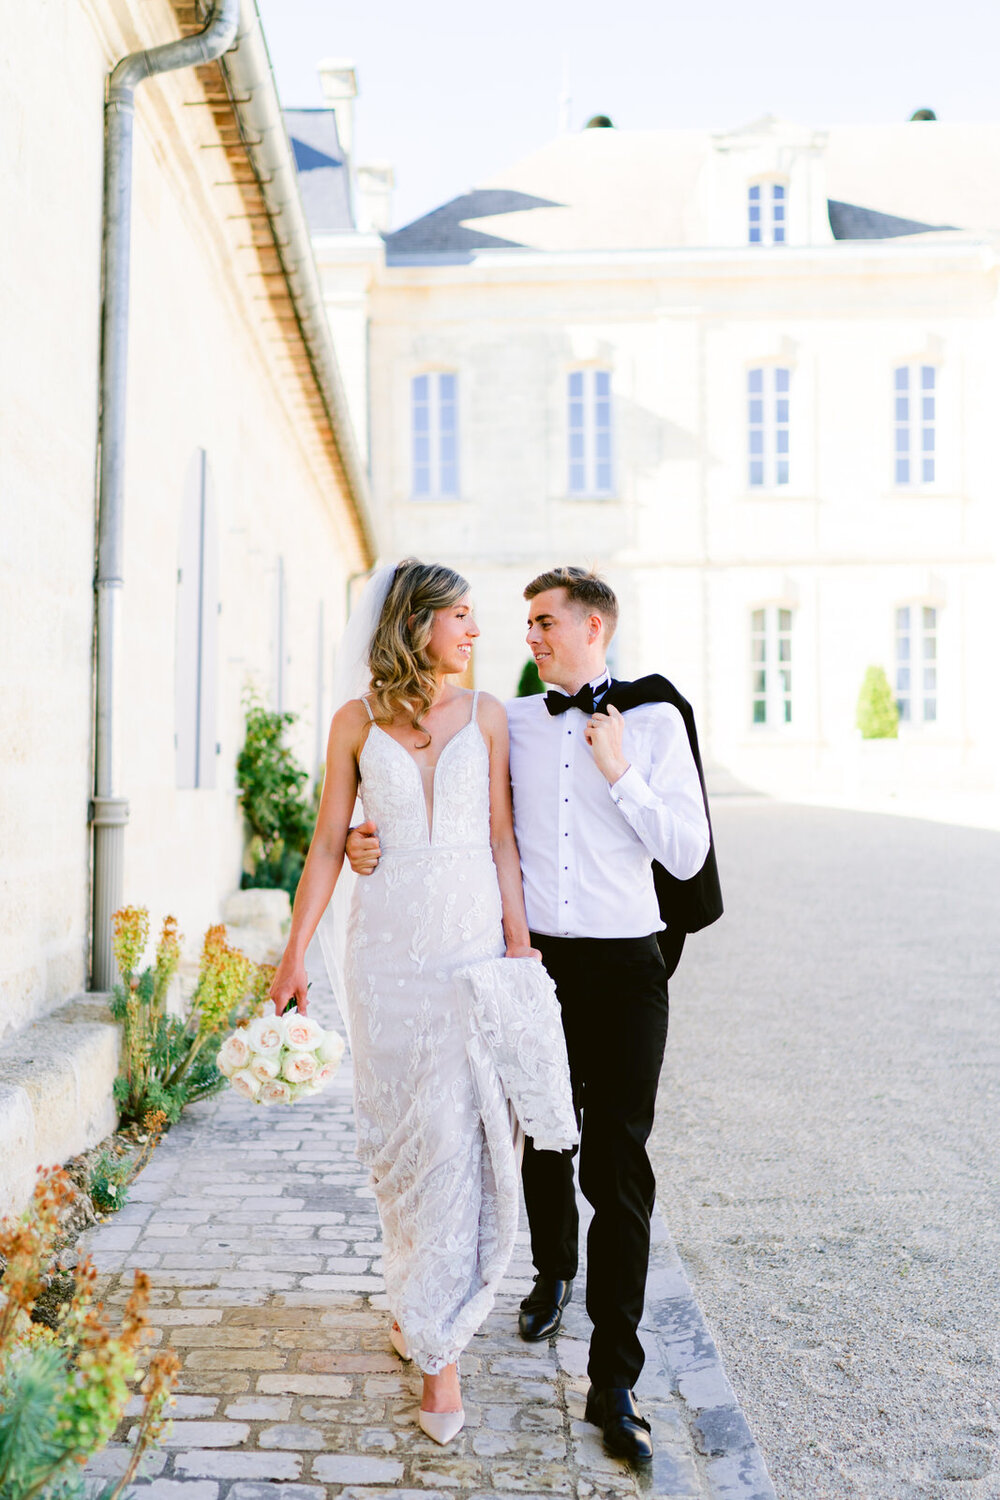 Chateau Soutard wedding, Bordeaux wedding photographer, St Emillion wedding in France, outdoor wedding in France-118.jpg